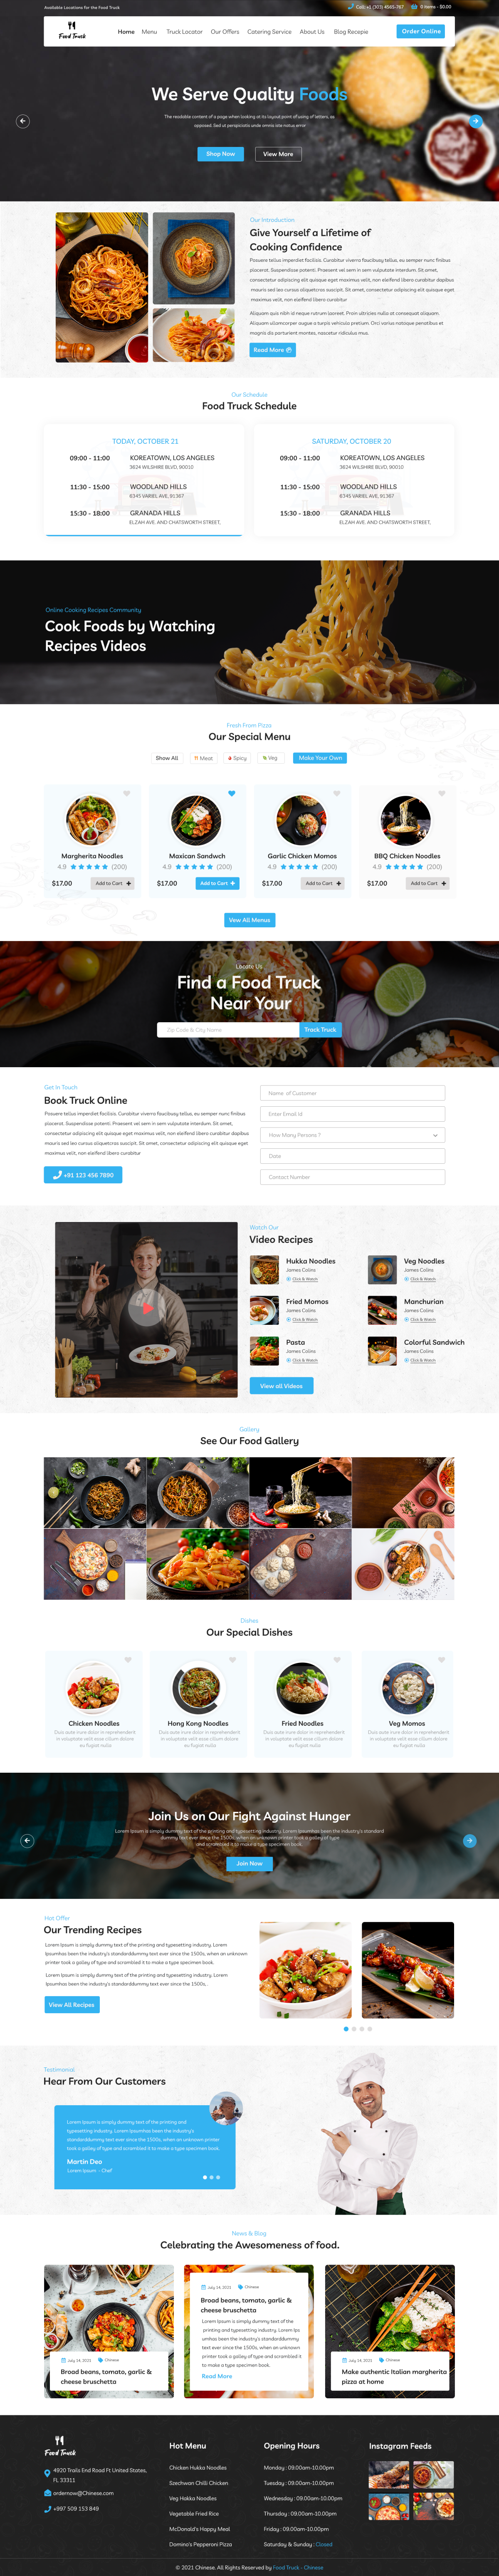 Catering Company WordPress Theme